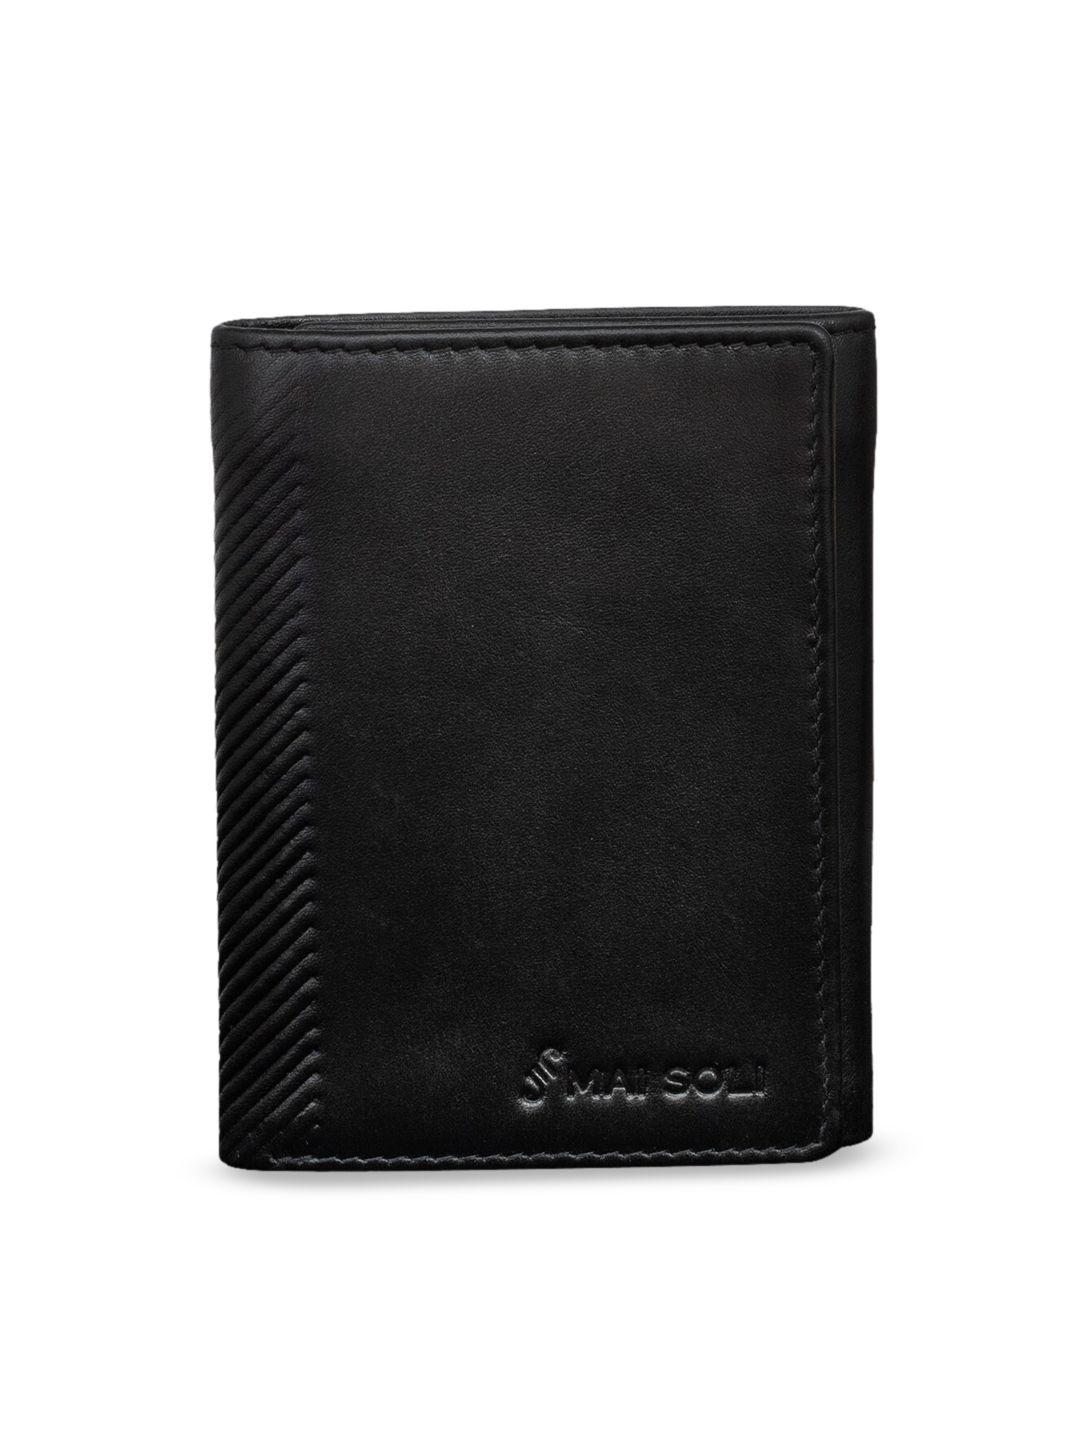 mai soli men black solid leather three fold wallet